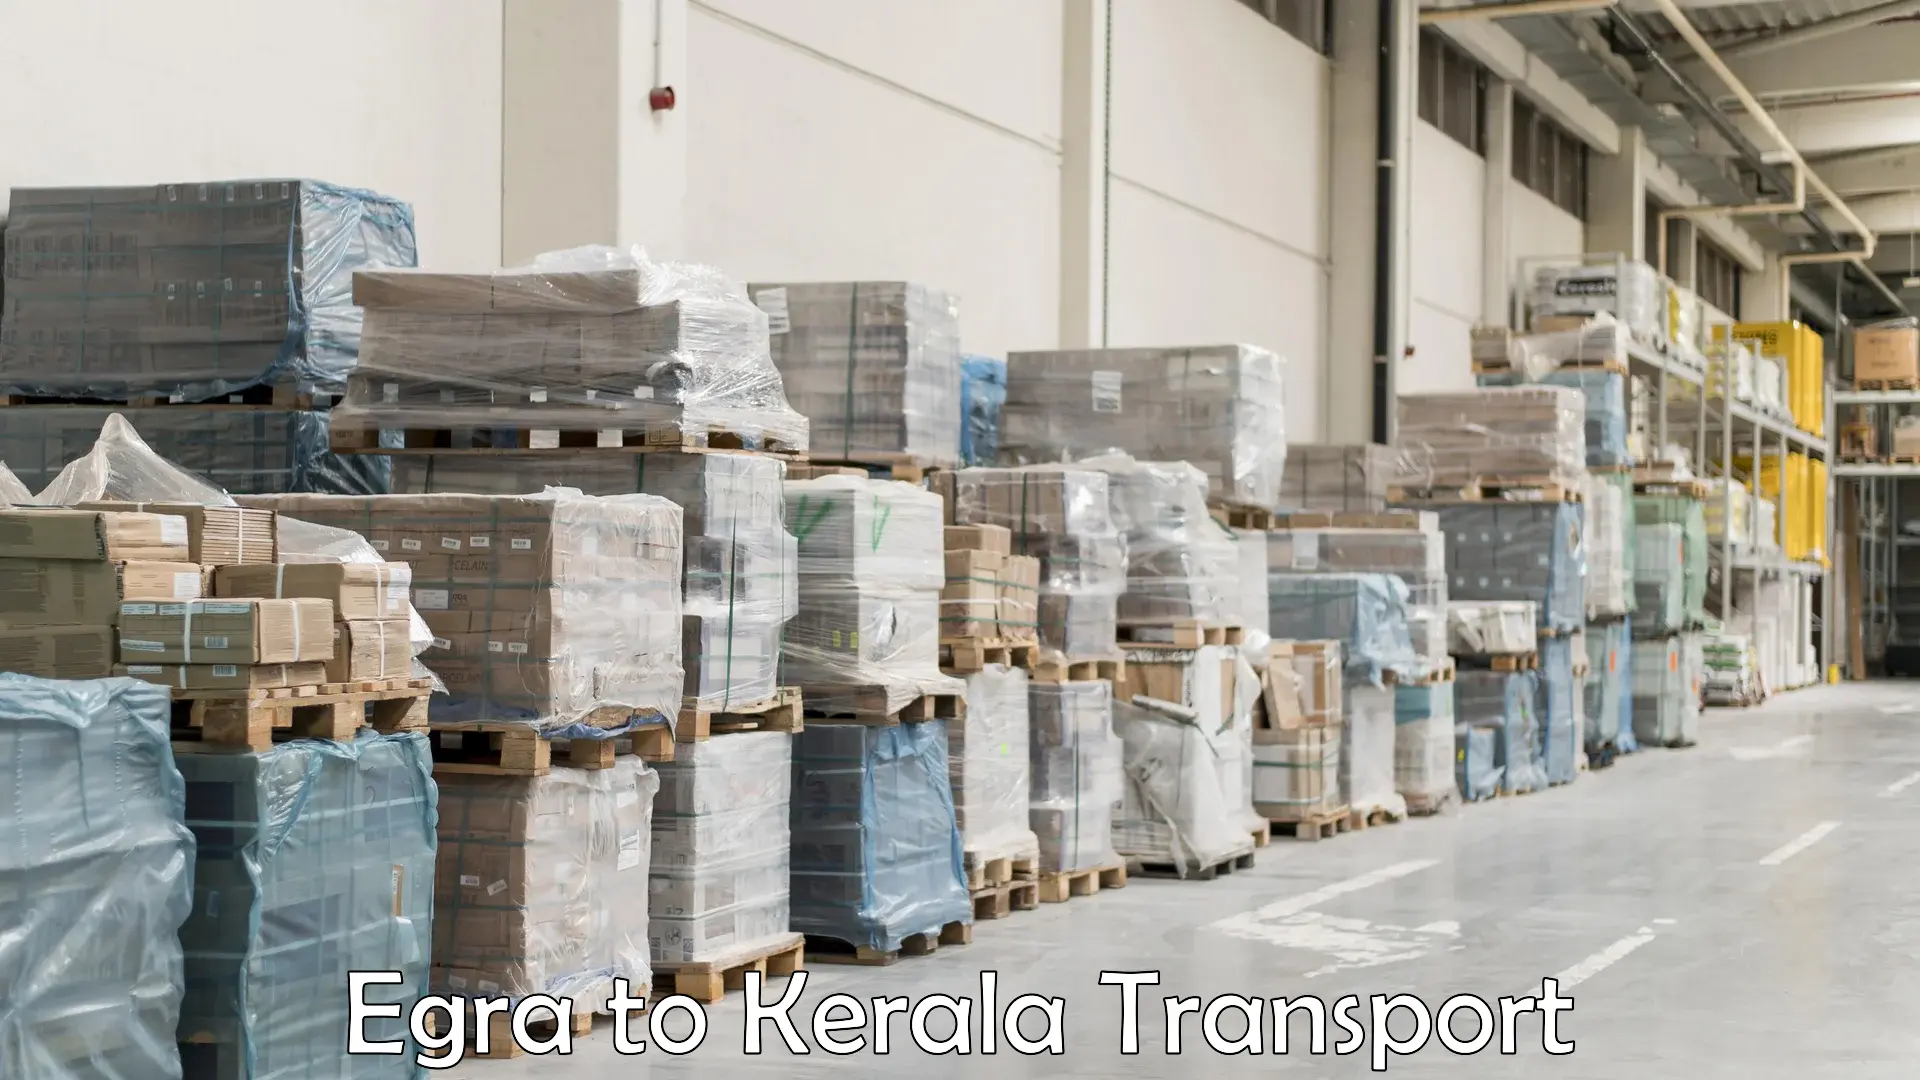 Intercity transport in Egra to Kerala